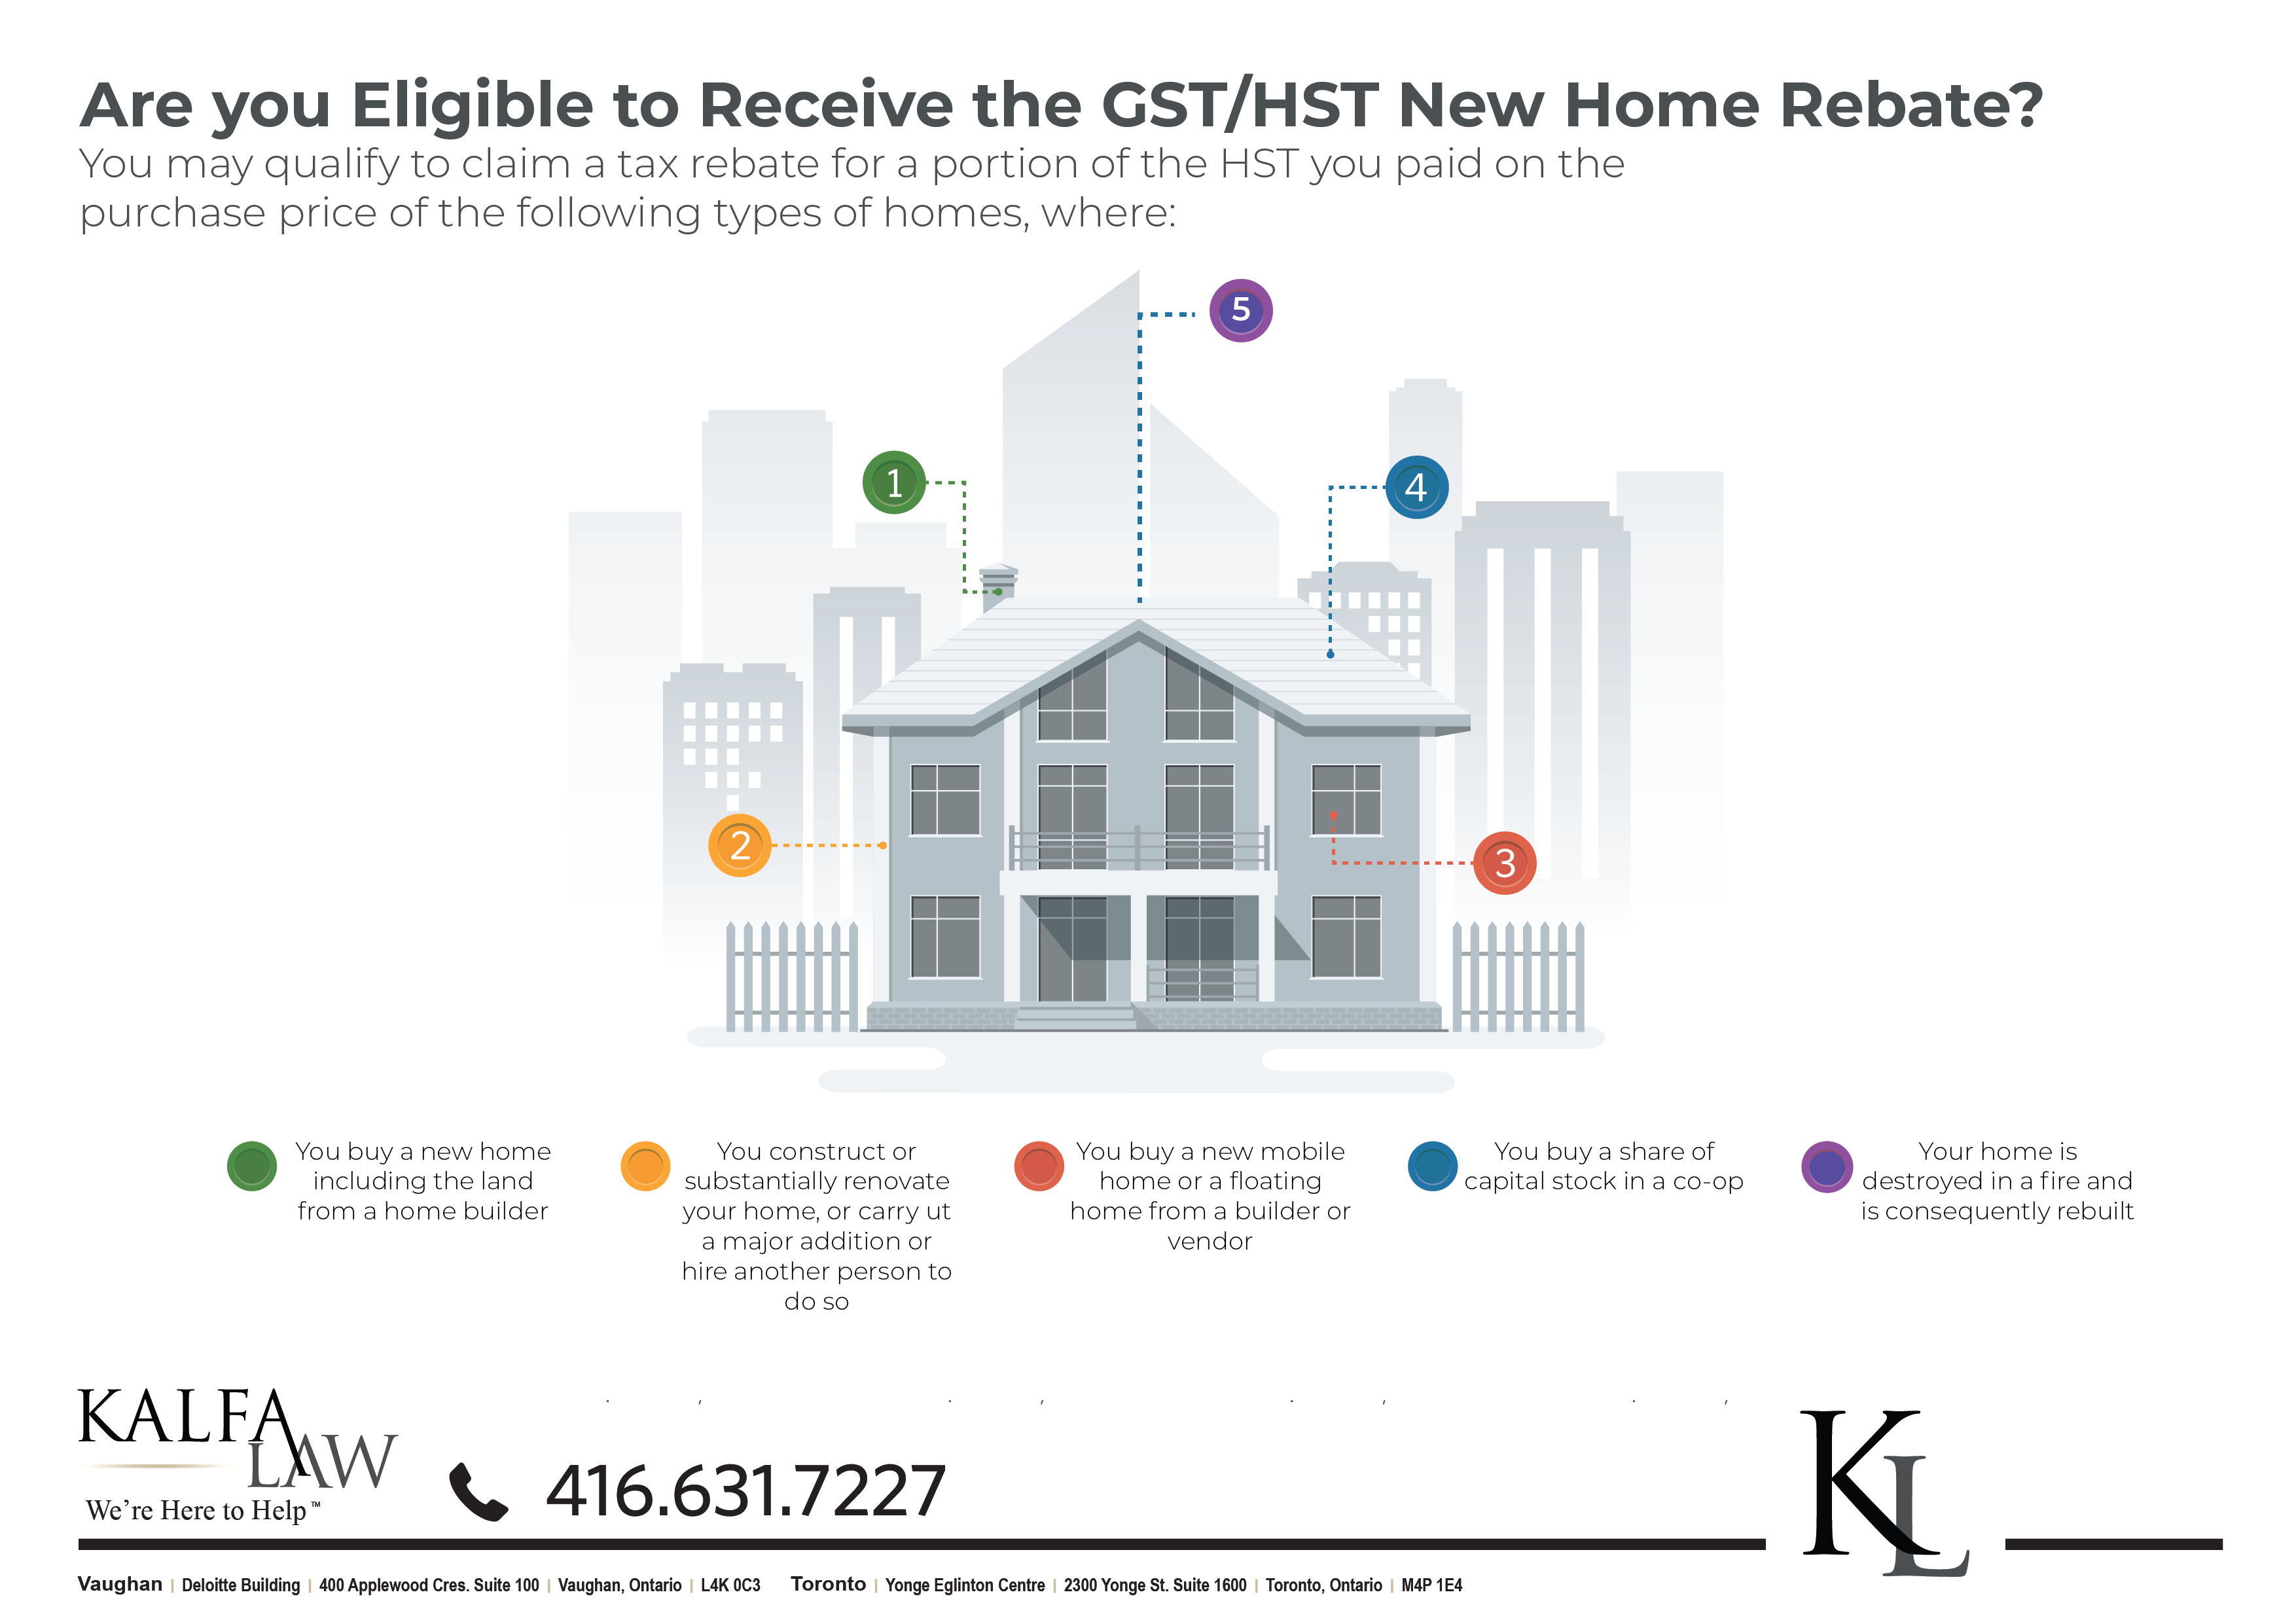 GST HST New Home Rebate 2020 Denied Kalfa Law